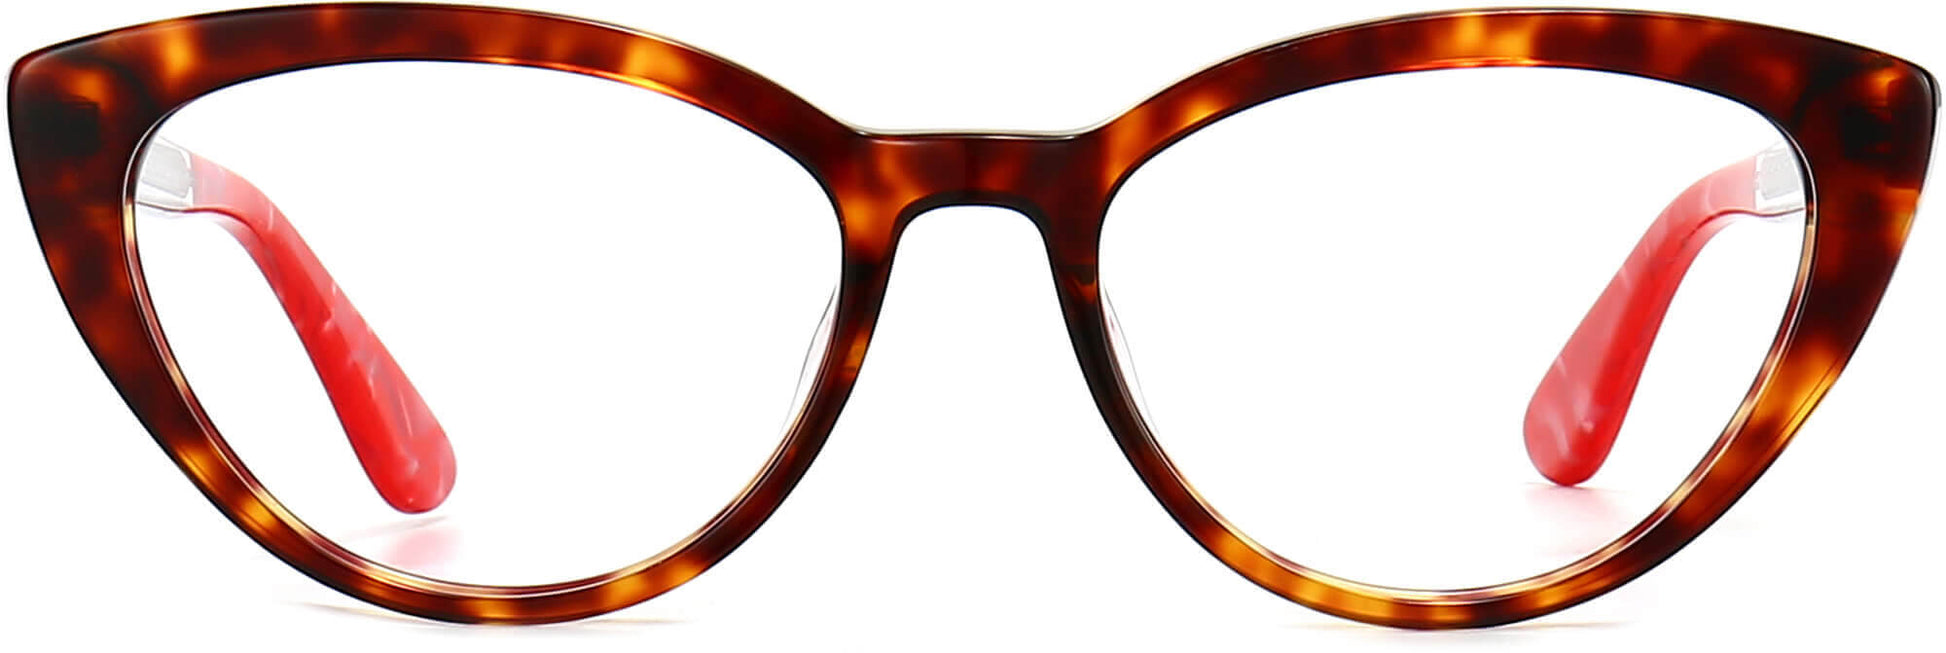 Harmony Cateye Tortoise Eyeglasses from ANRRI, front view